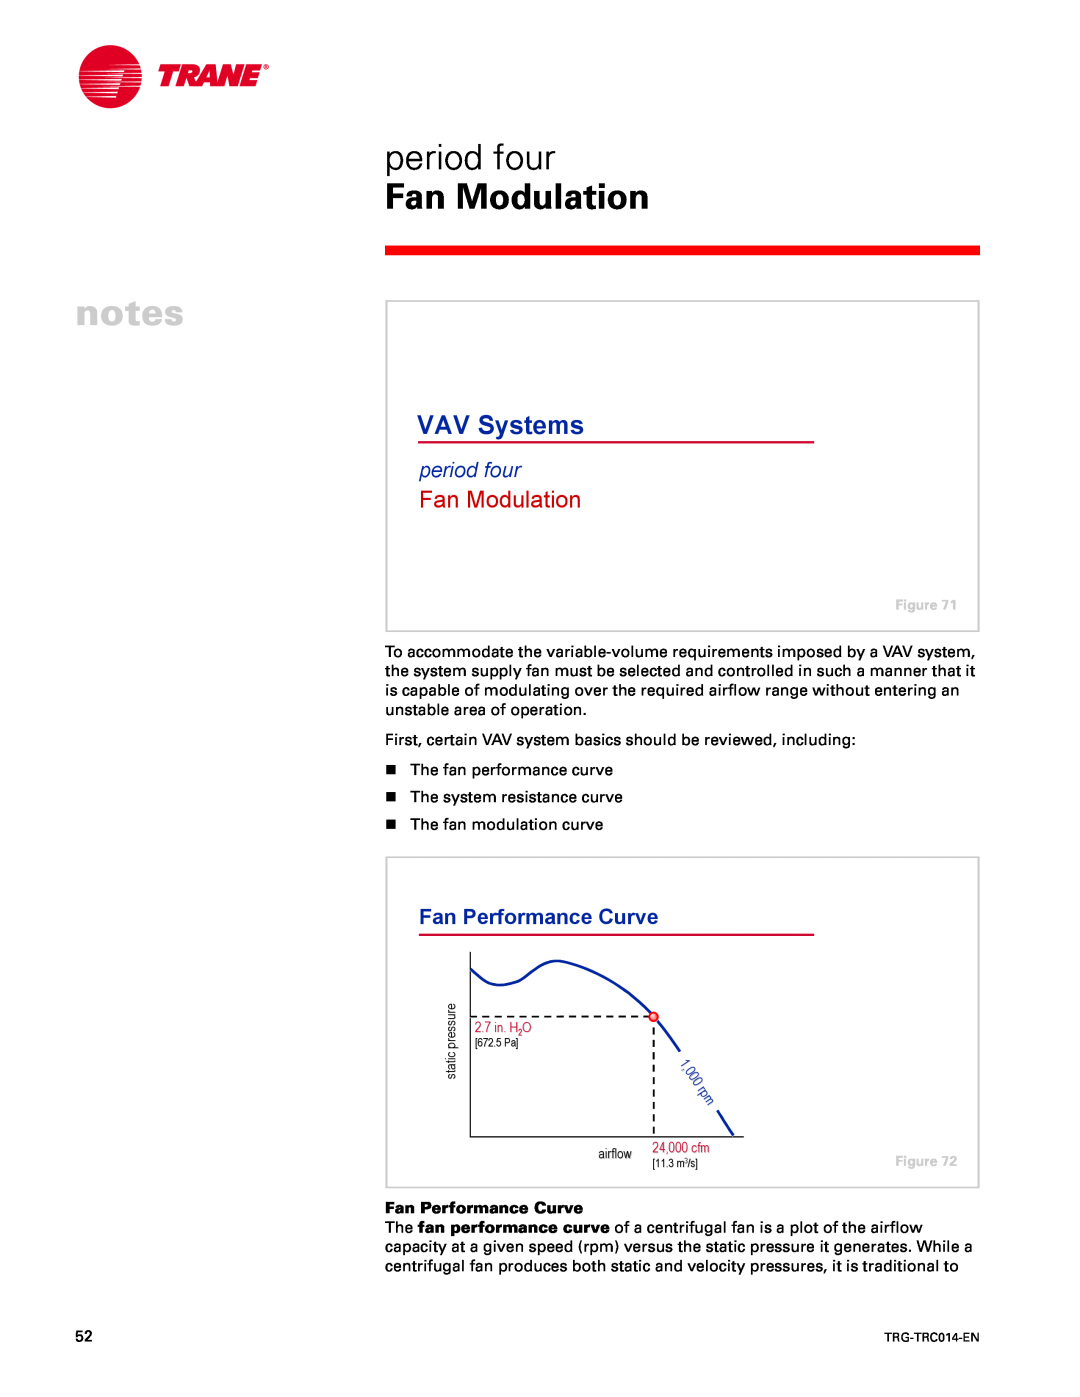 Trane TRG-TRC014-EN manual period four, Fan Modulation, Fan Performance Curve, VAV Systems 